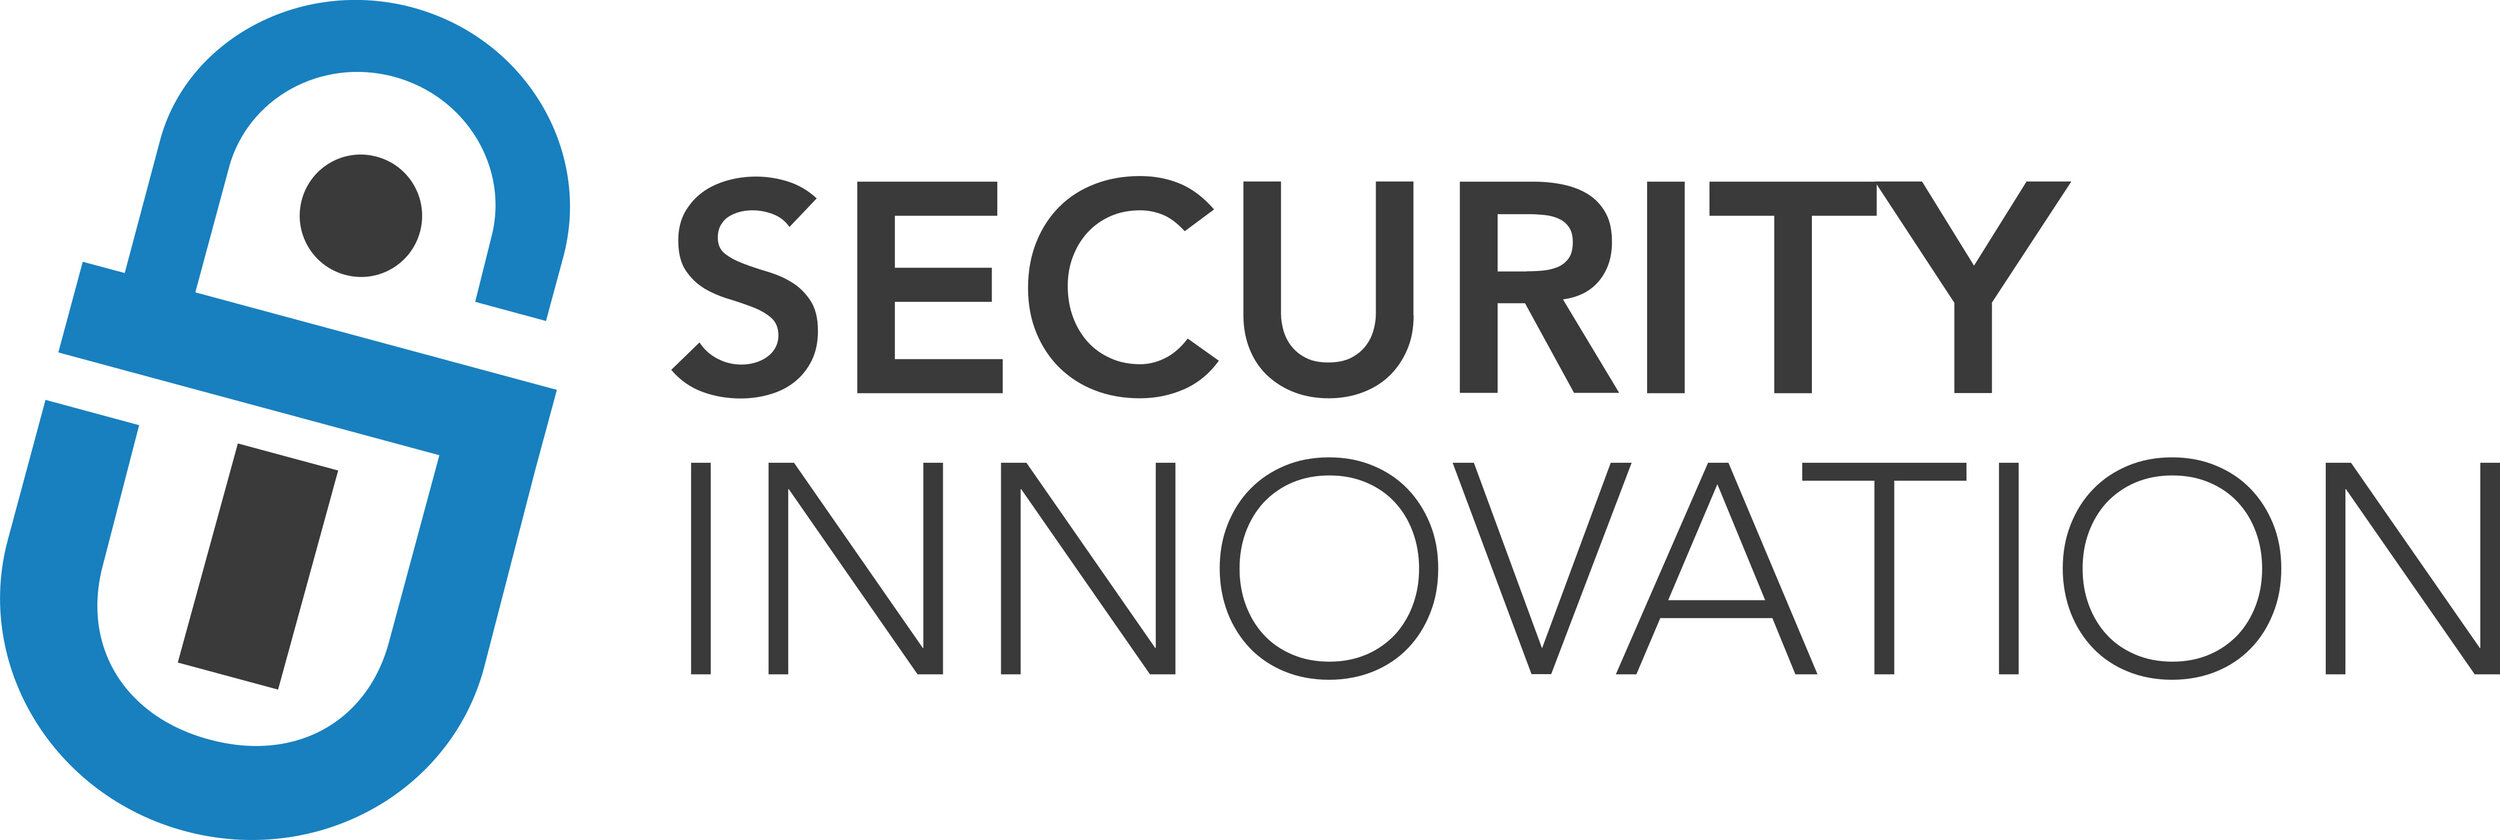 SécuritéInnovation-logo.jpg